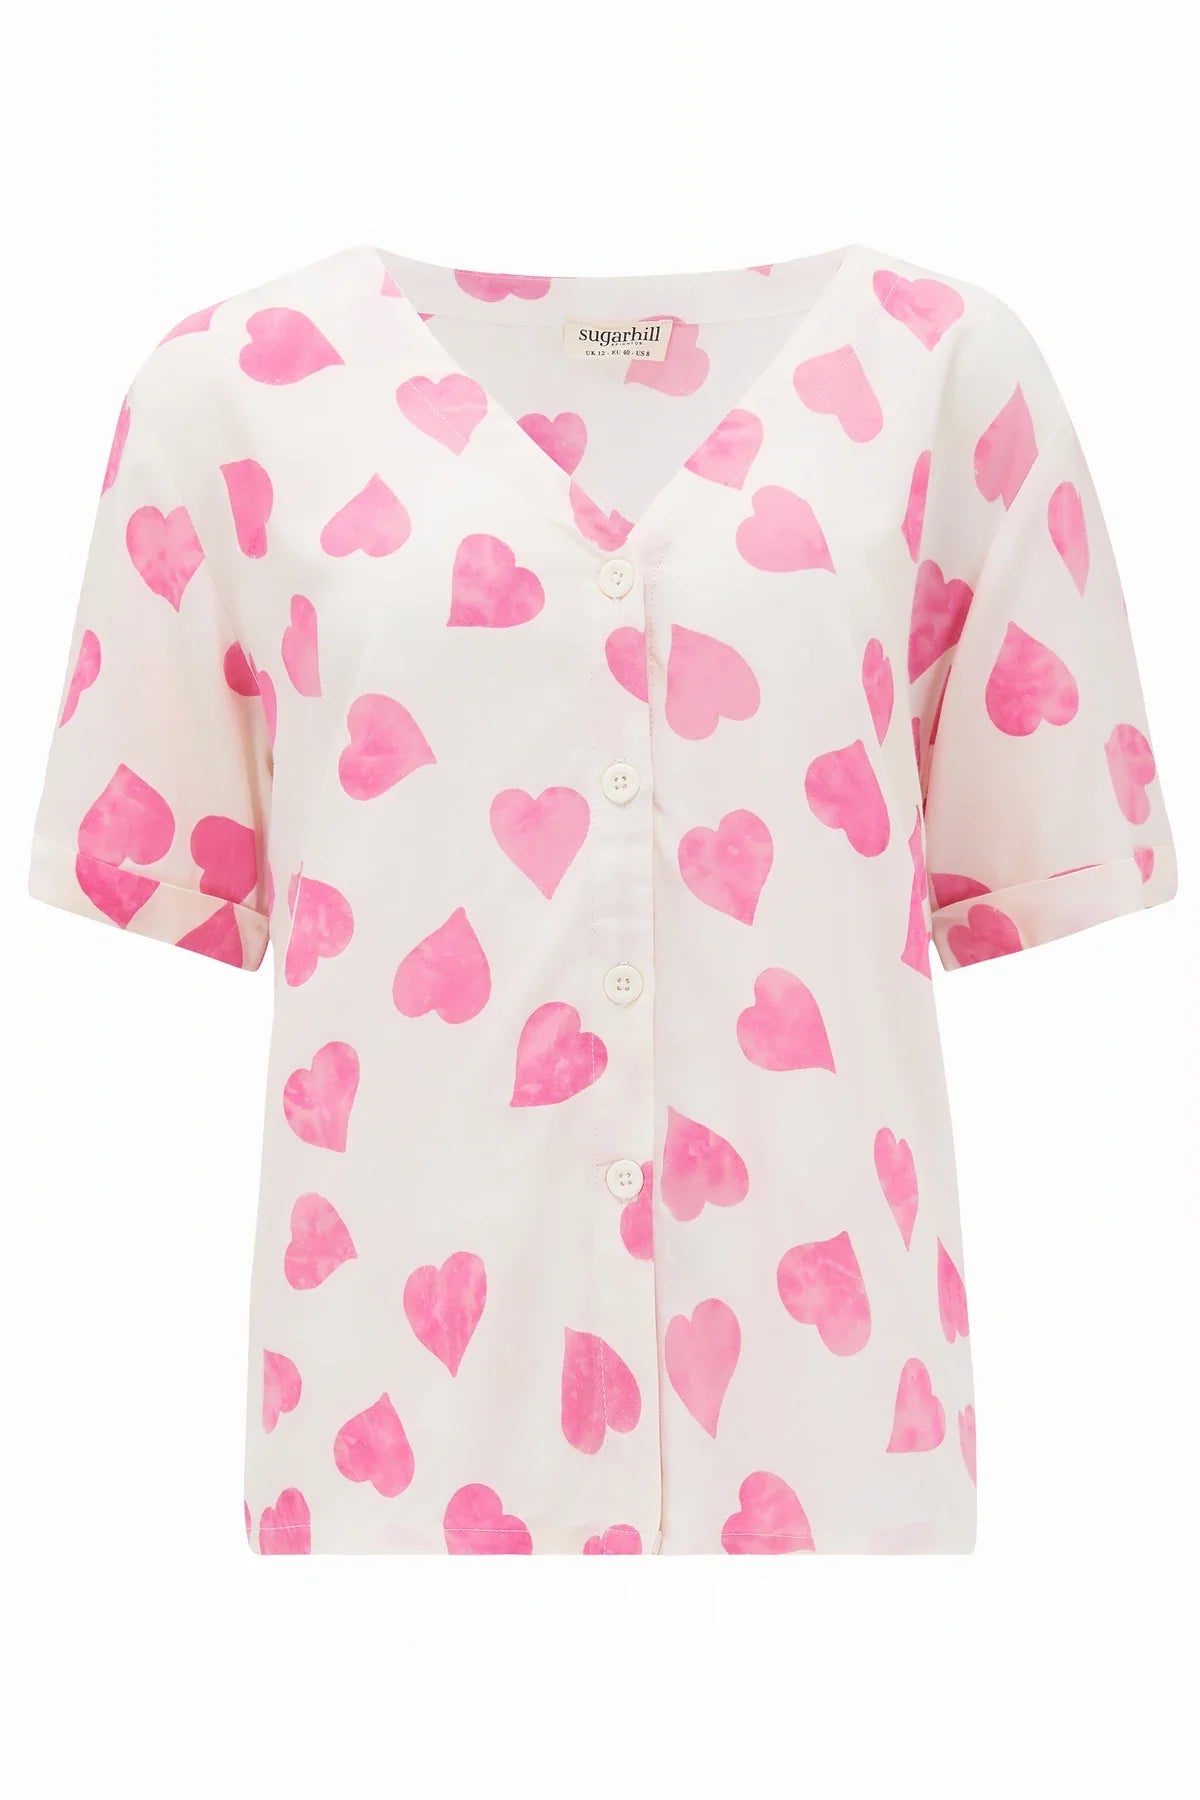 Hatty Batik Shirt - Off White/pink, Big Hearts